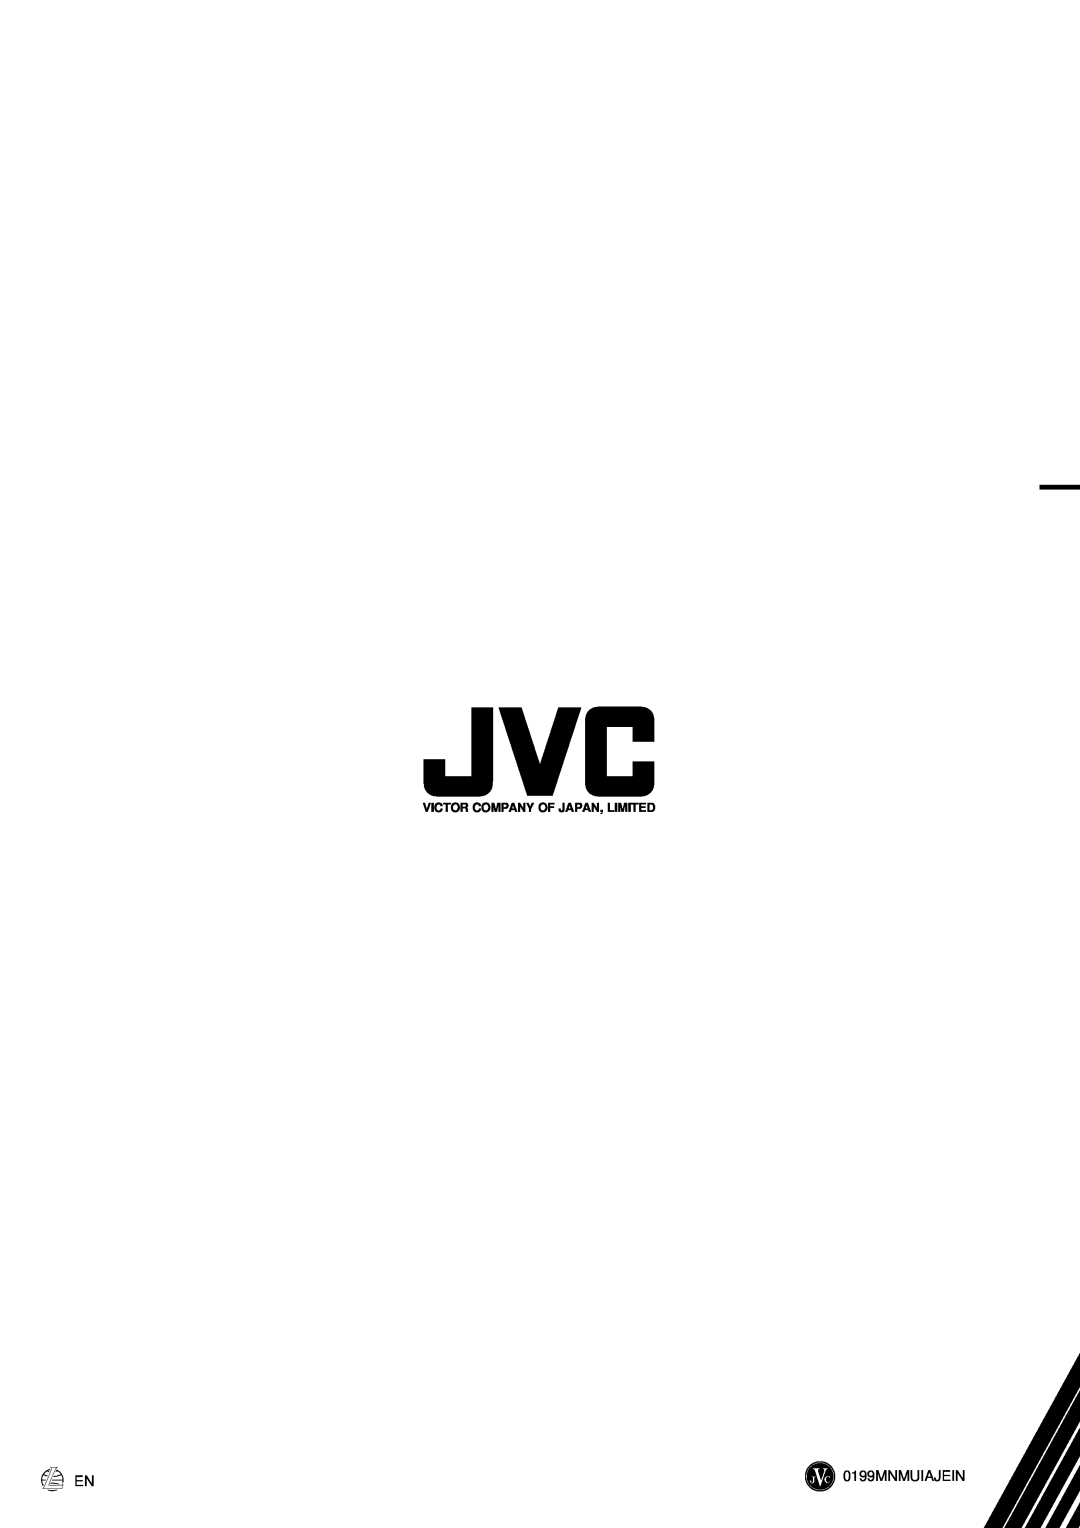 JVC RV-B99 BK/BU manual 0199MNMUIAJEIN, Victor Company Of Japan, Limited 